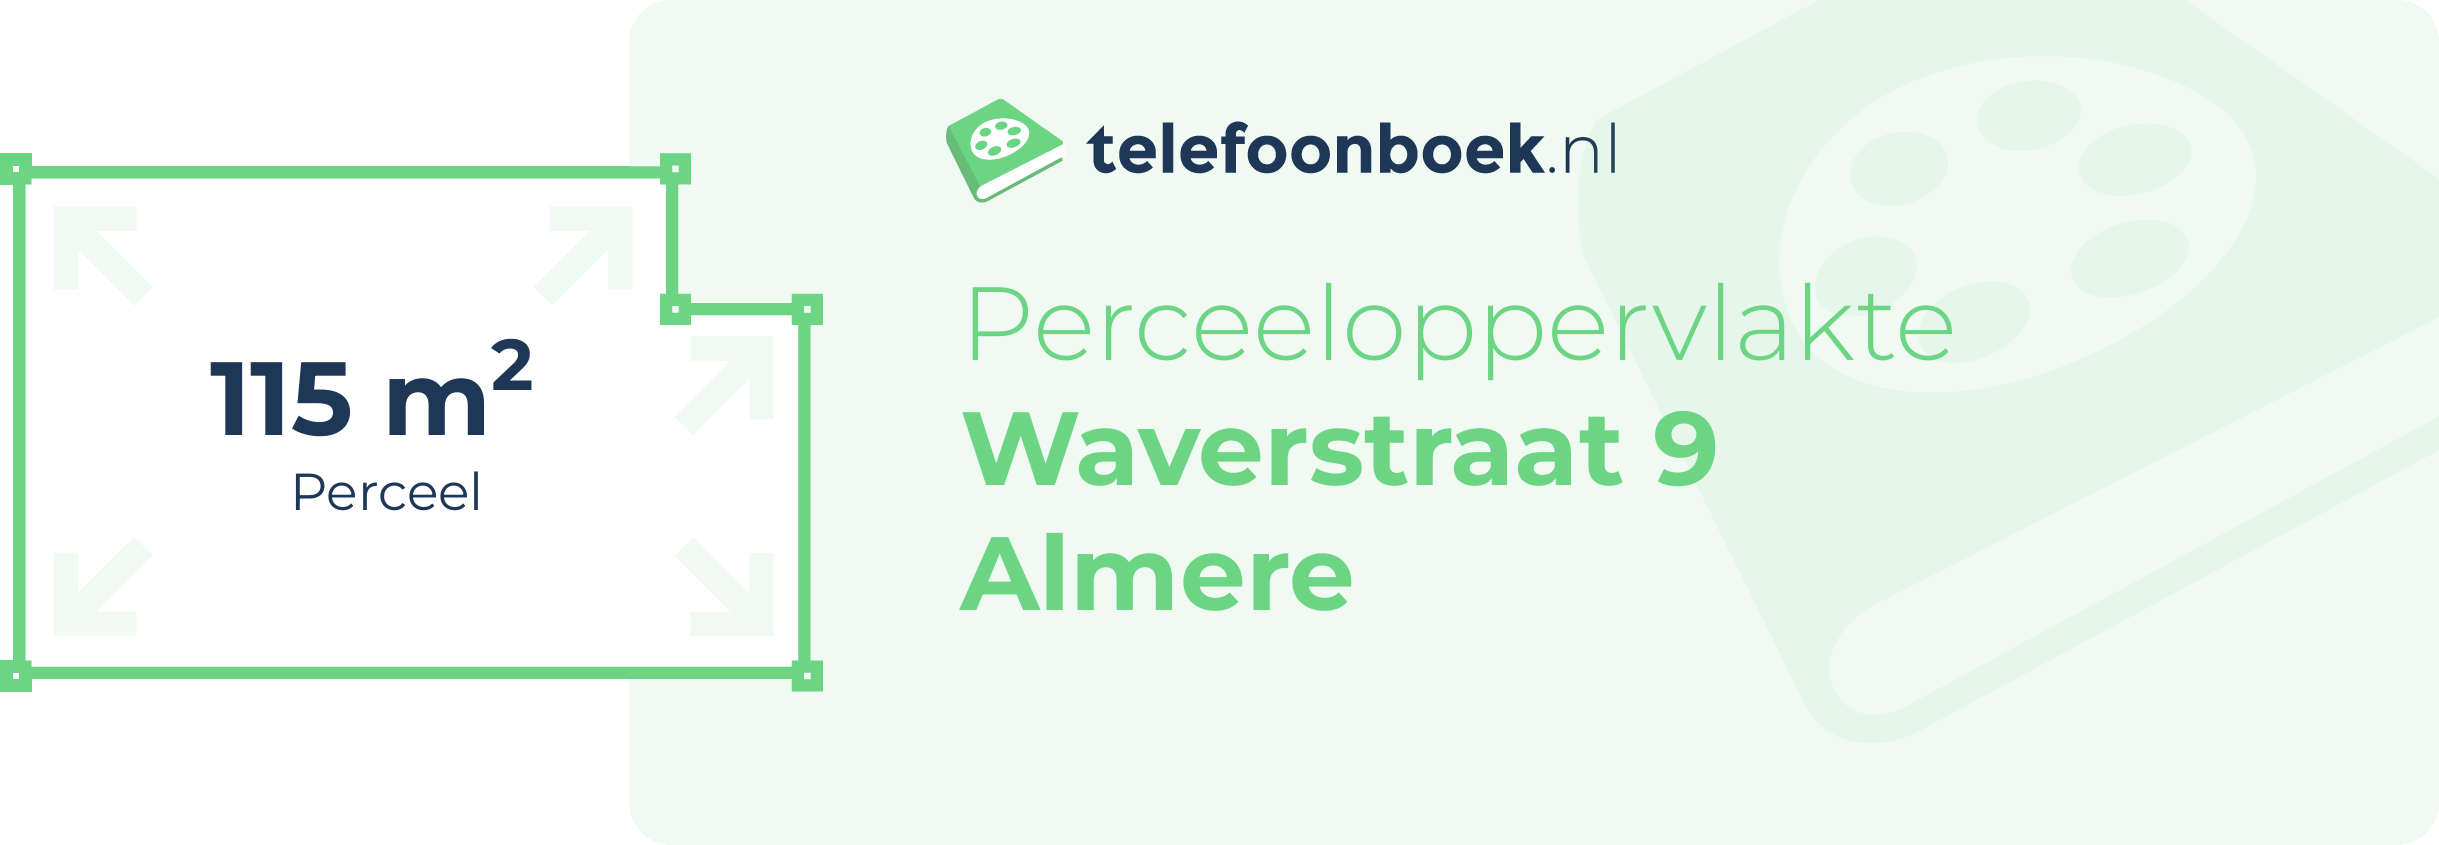 Perceeloppervlakte Waverstraat 9 Almere